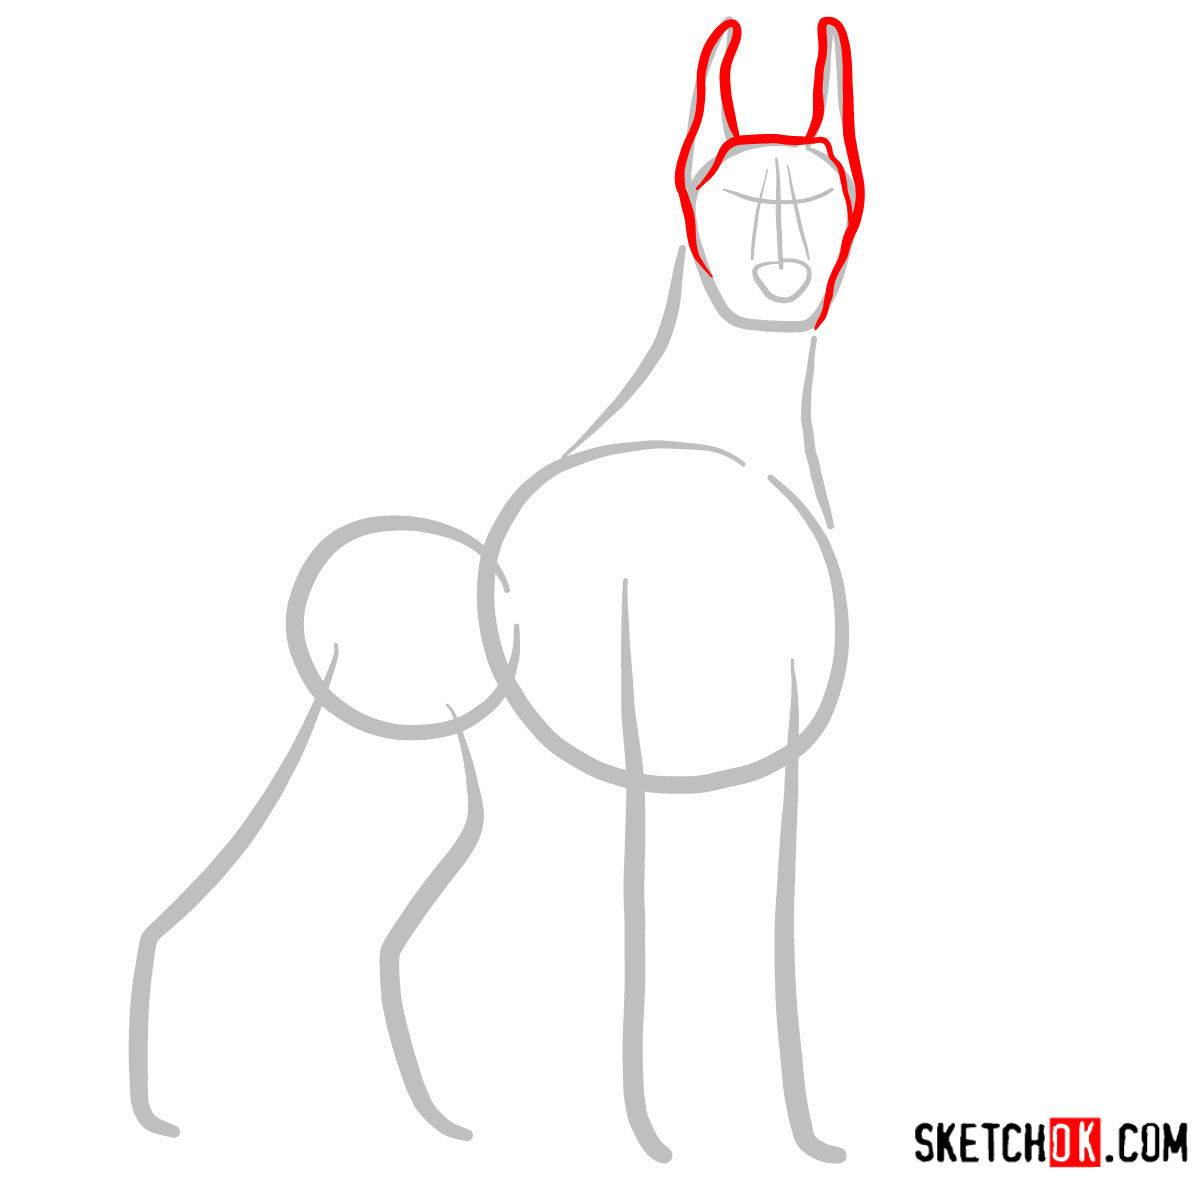 How to draw the Dobermann dog - step 02